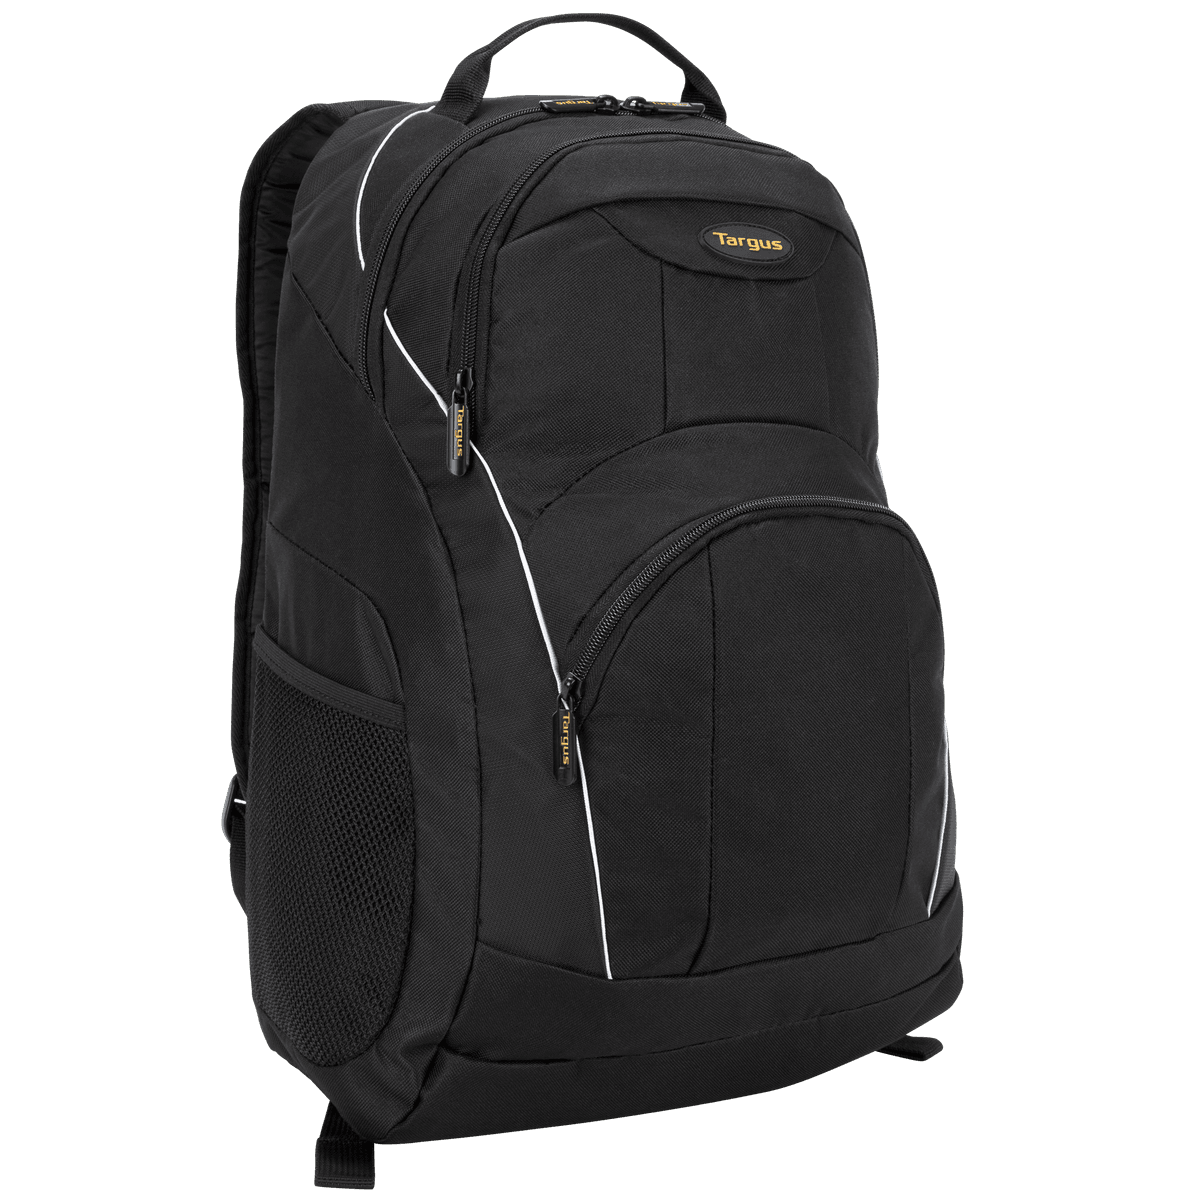 Motor 16-inch Laptop Backpack | Buy Direct from Targus